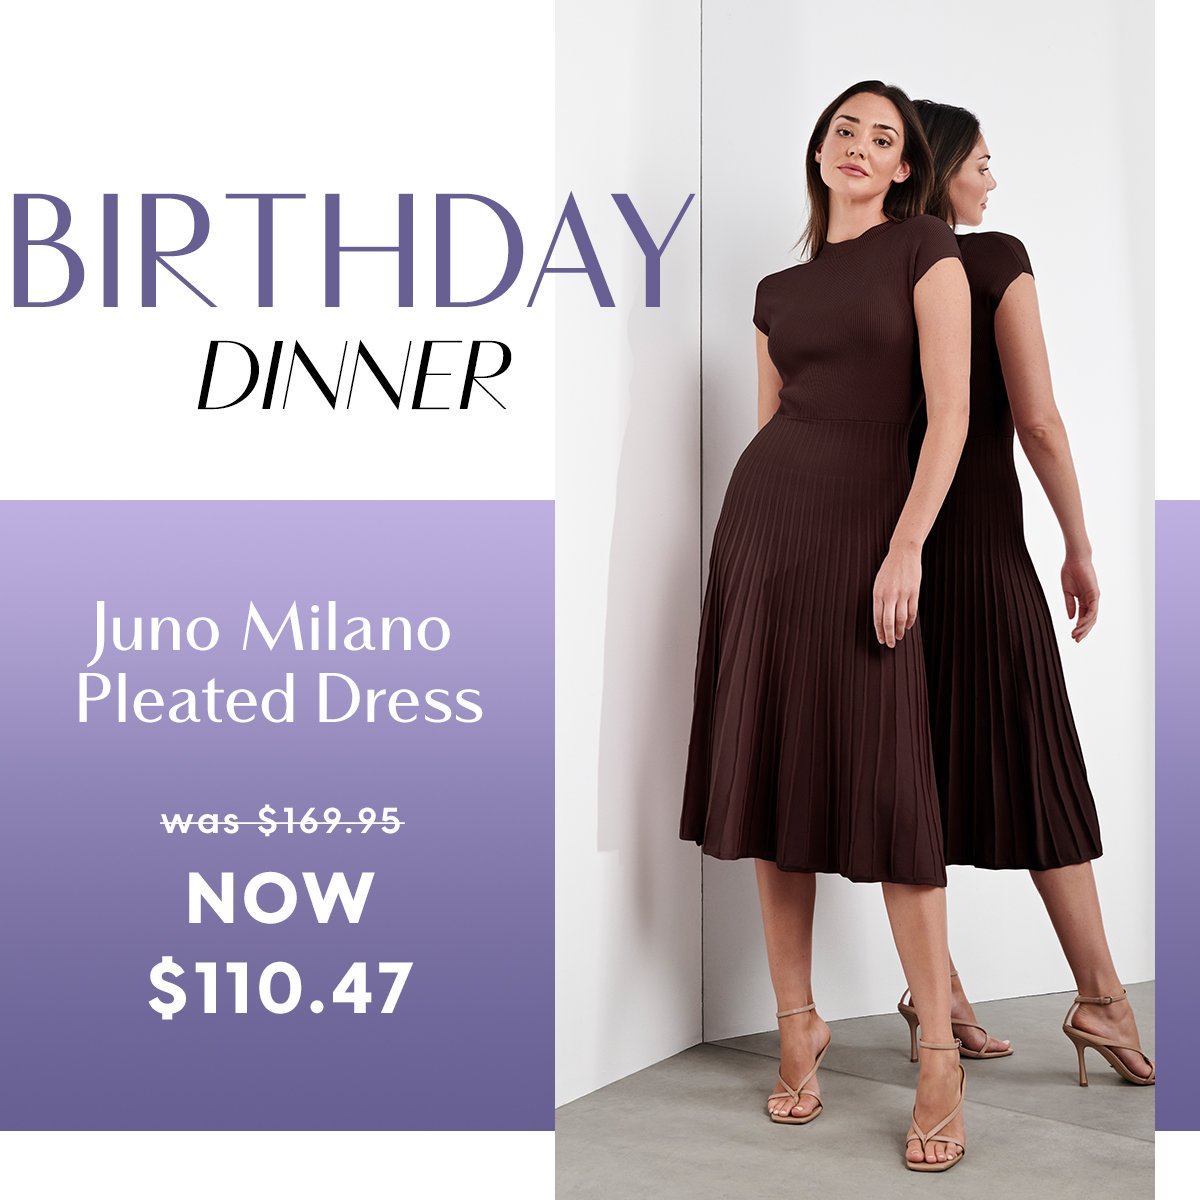 Birthday Dinner. Juno Milano Pleated Dress